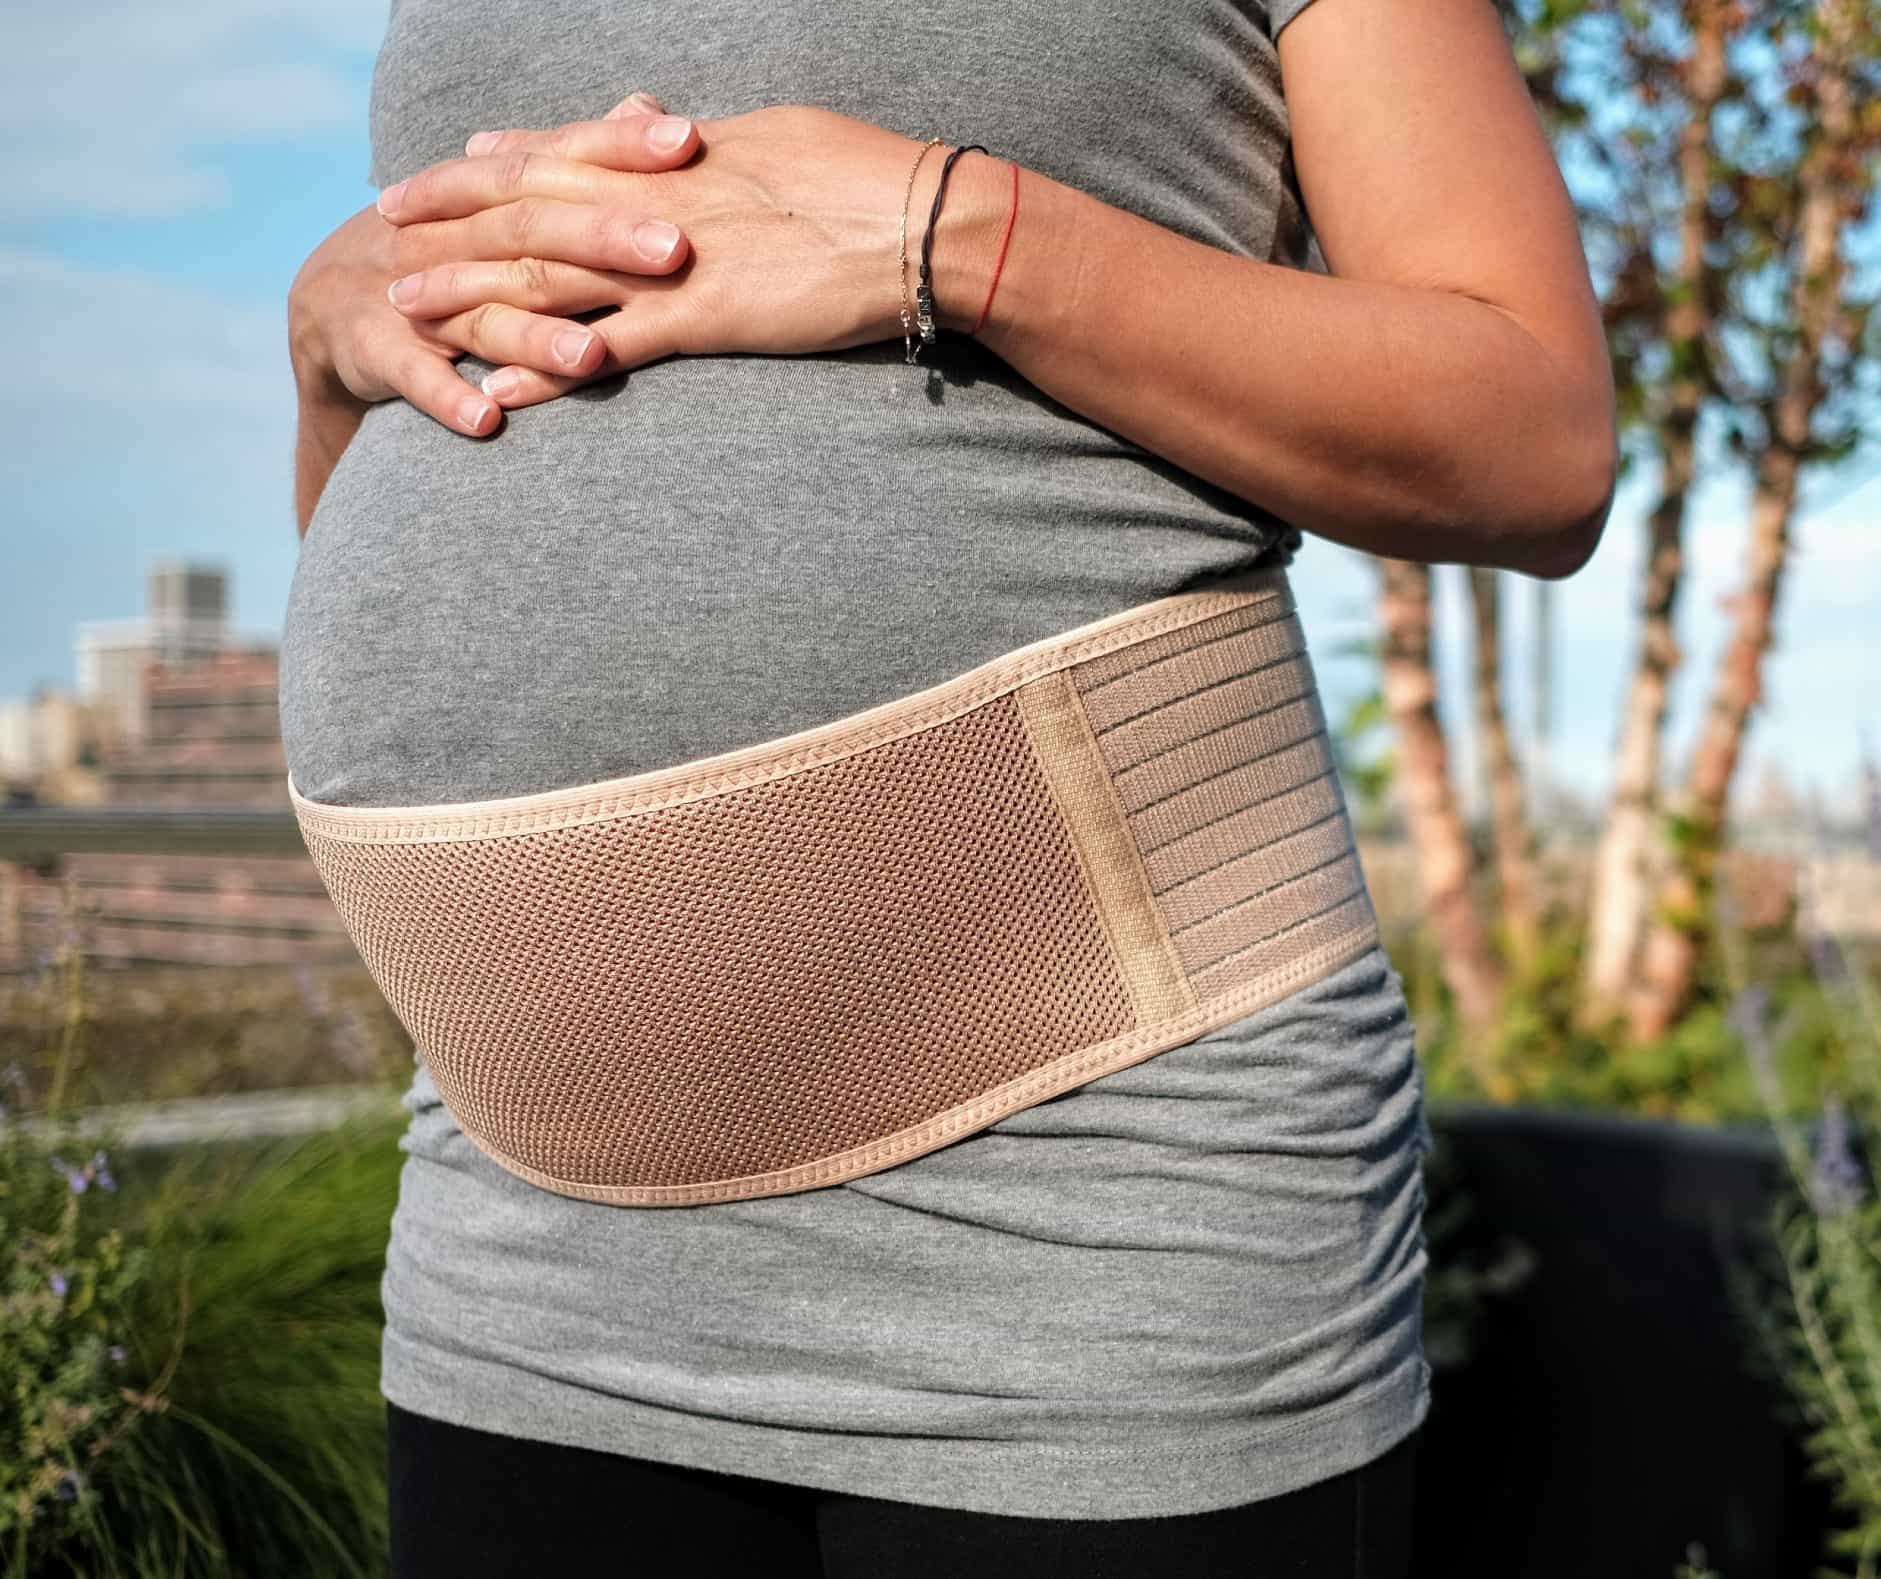 Pregnancy & Maternity Belt - Belly Band